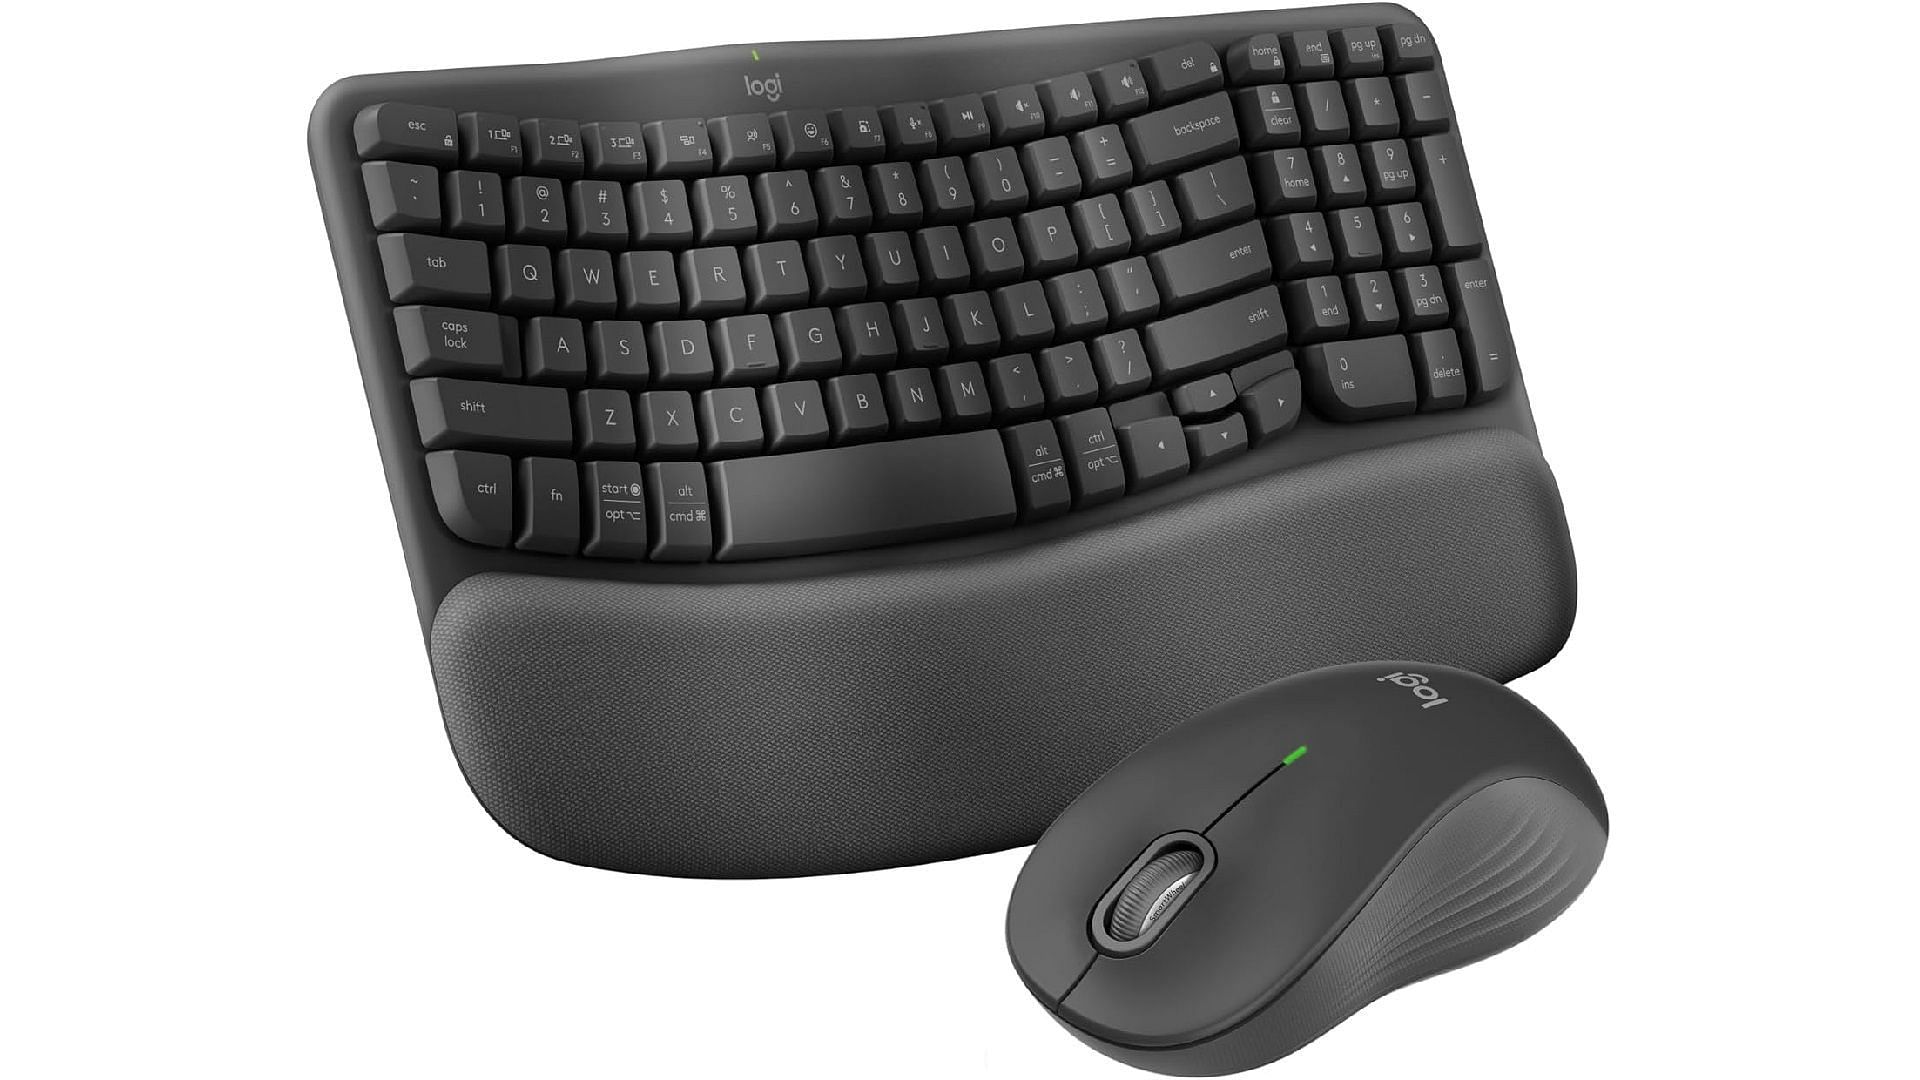 Logitech Wave Keys MK670 keyboard and mouse combo (Image via Logitech/Amazon)